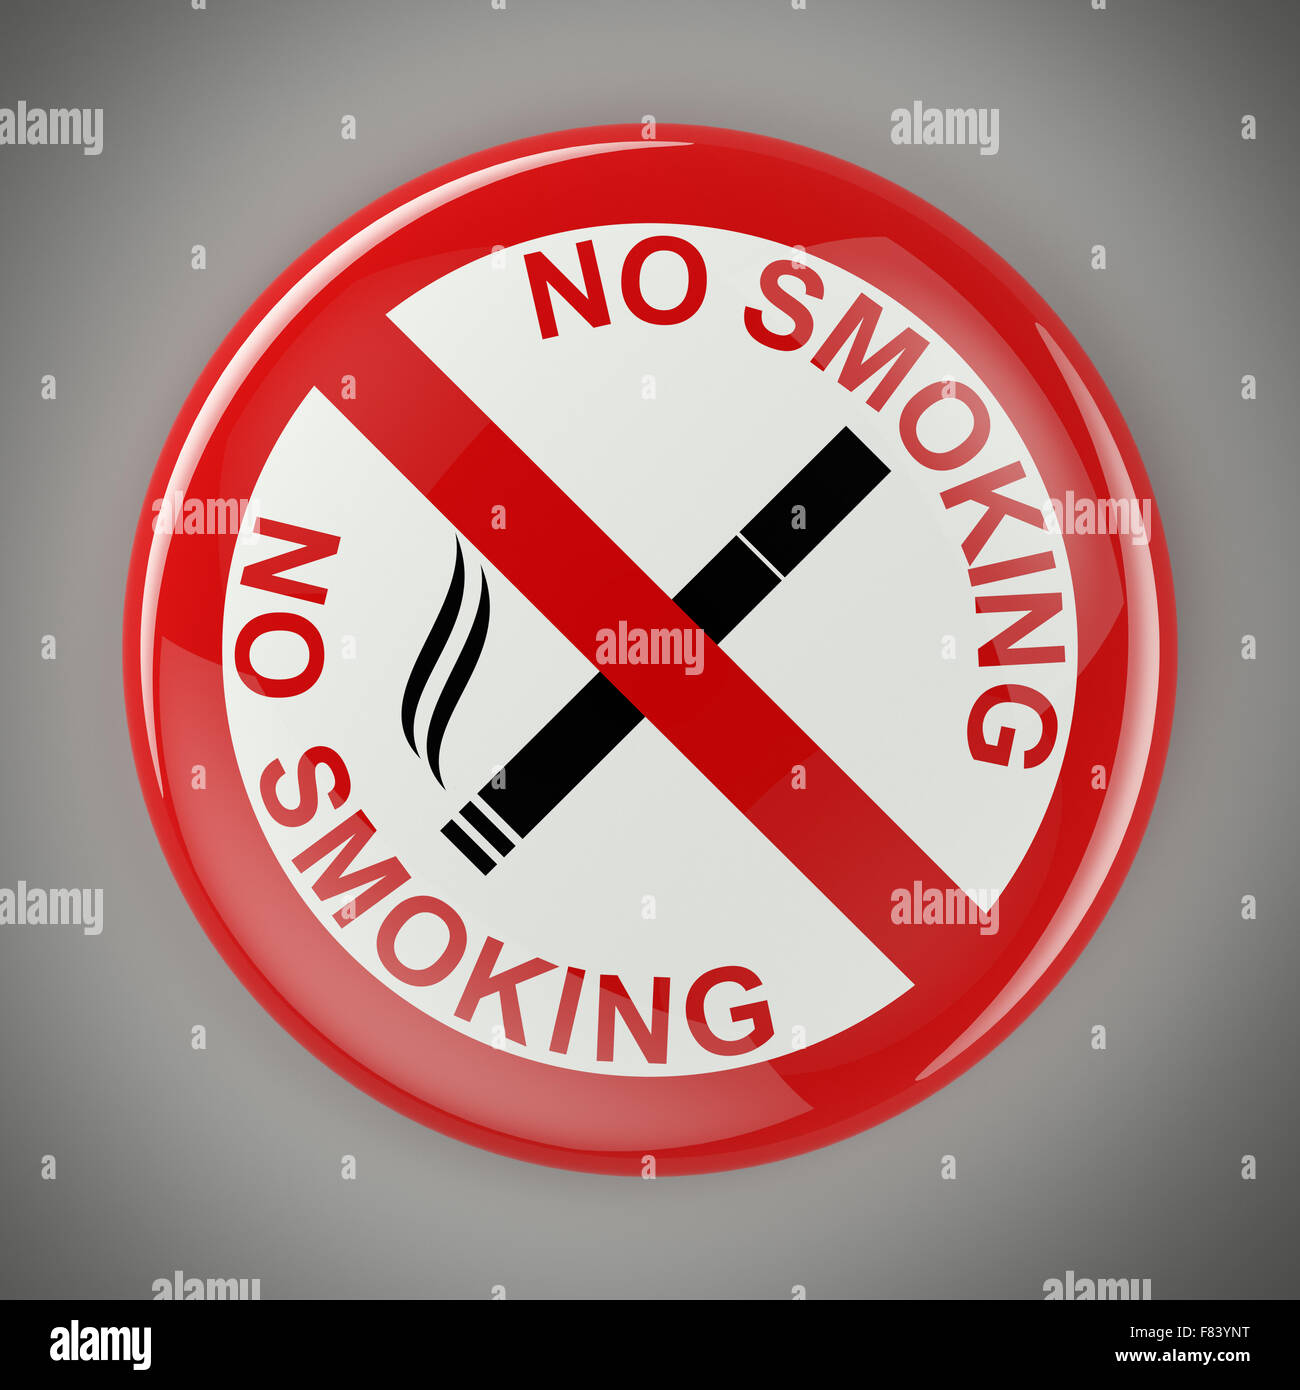 Circular no smoking sign Stock Photo